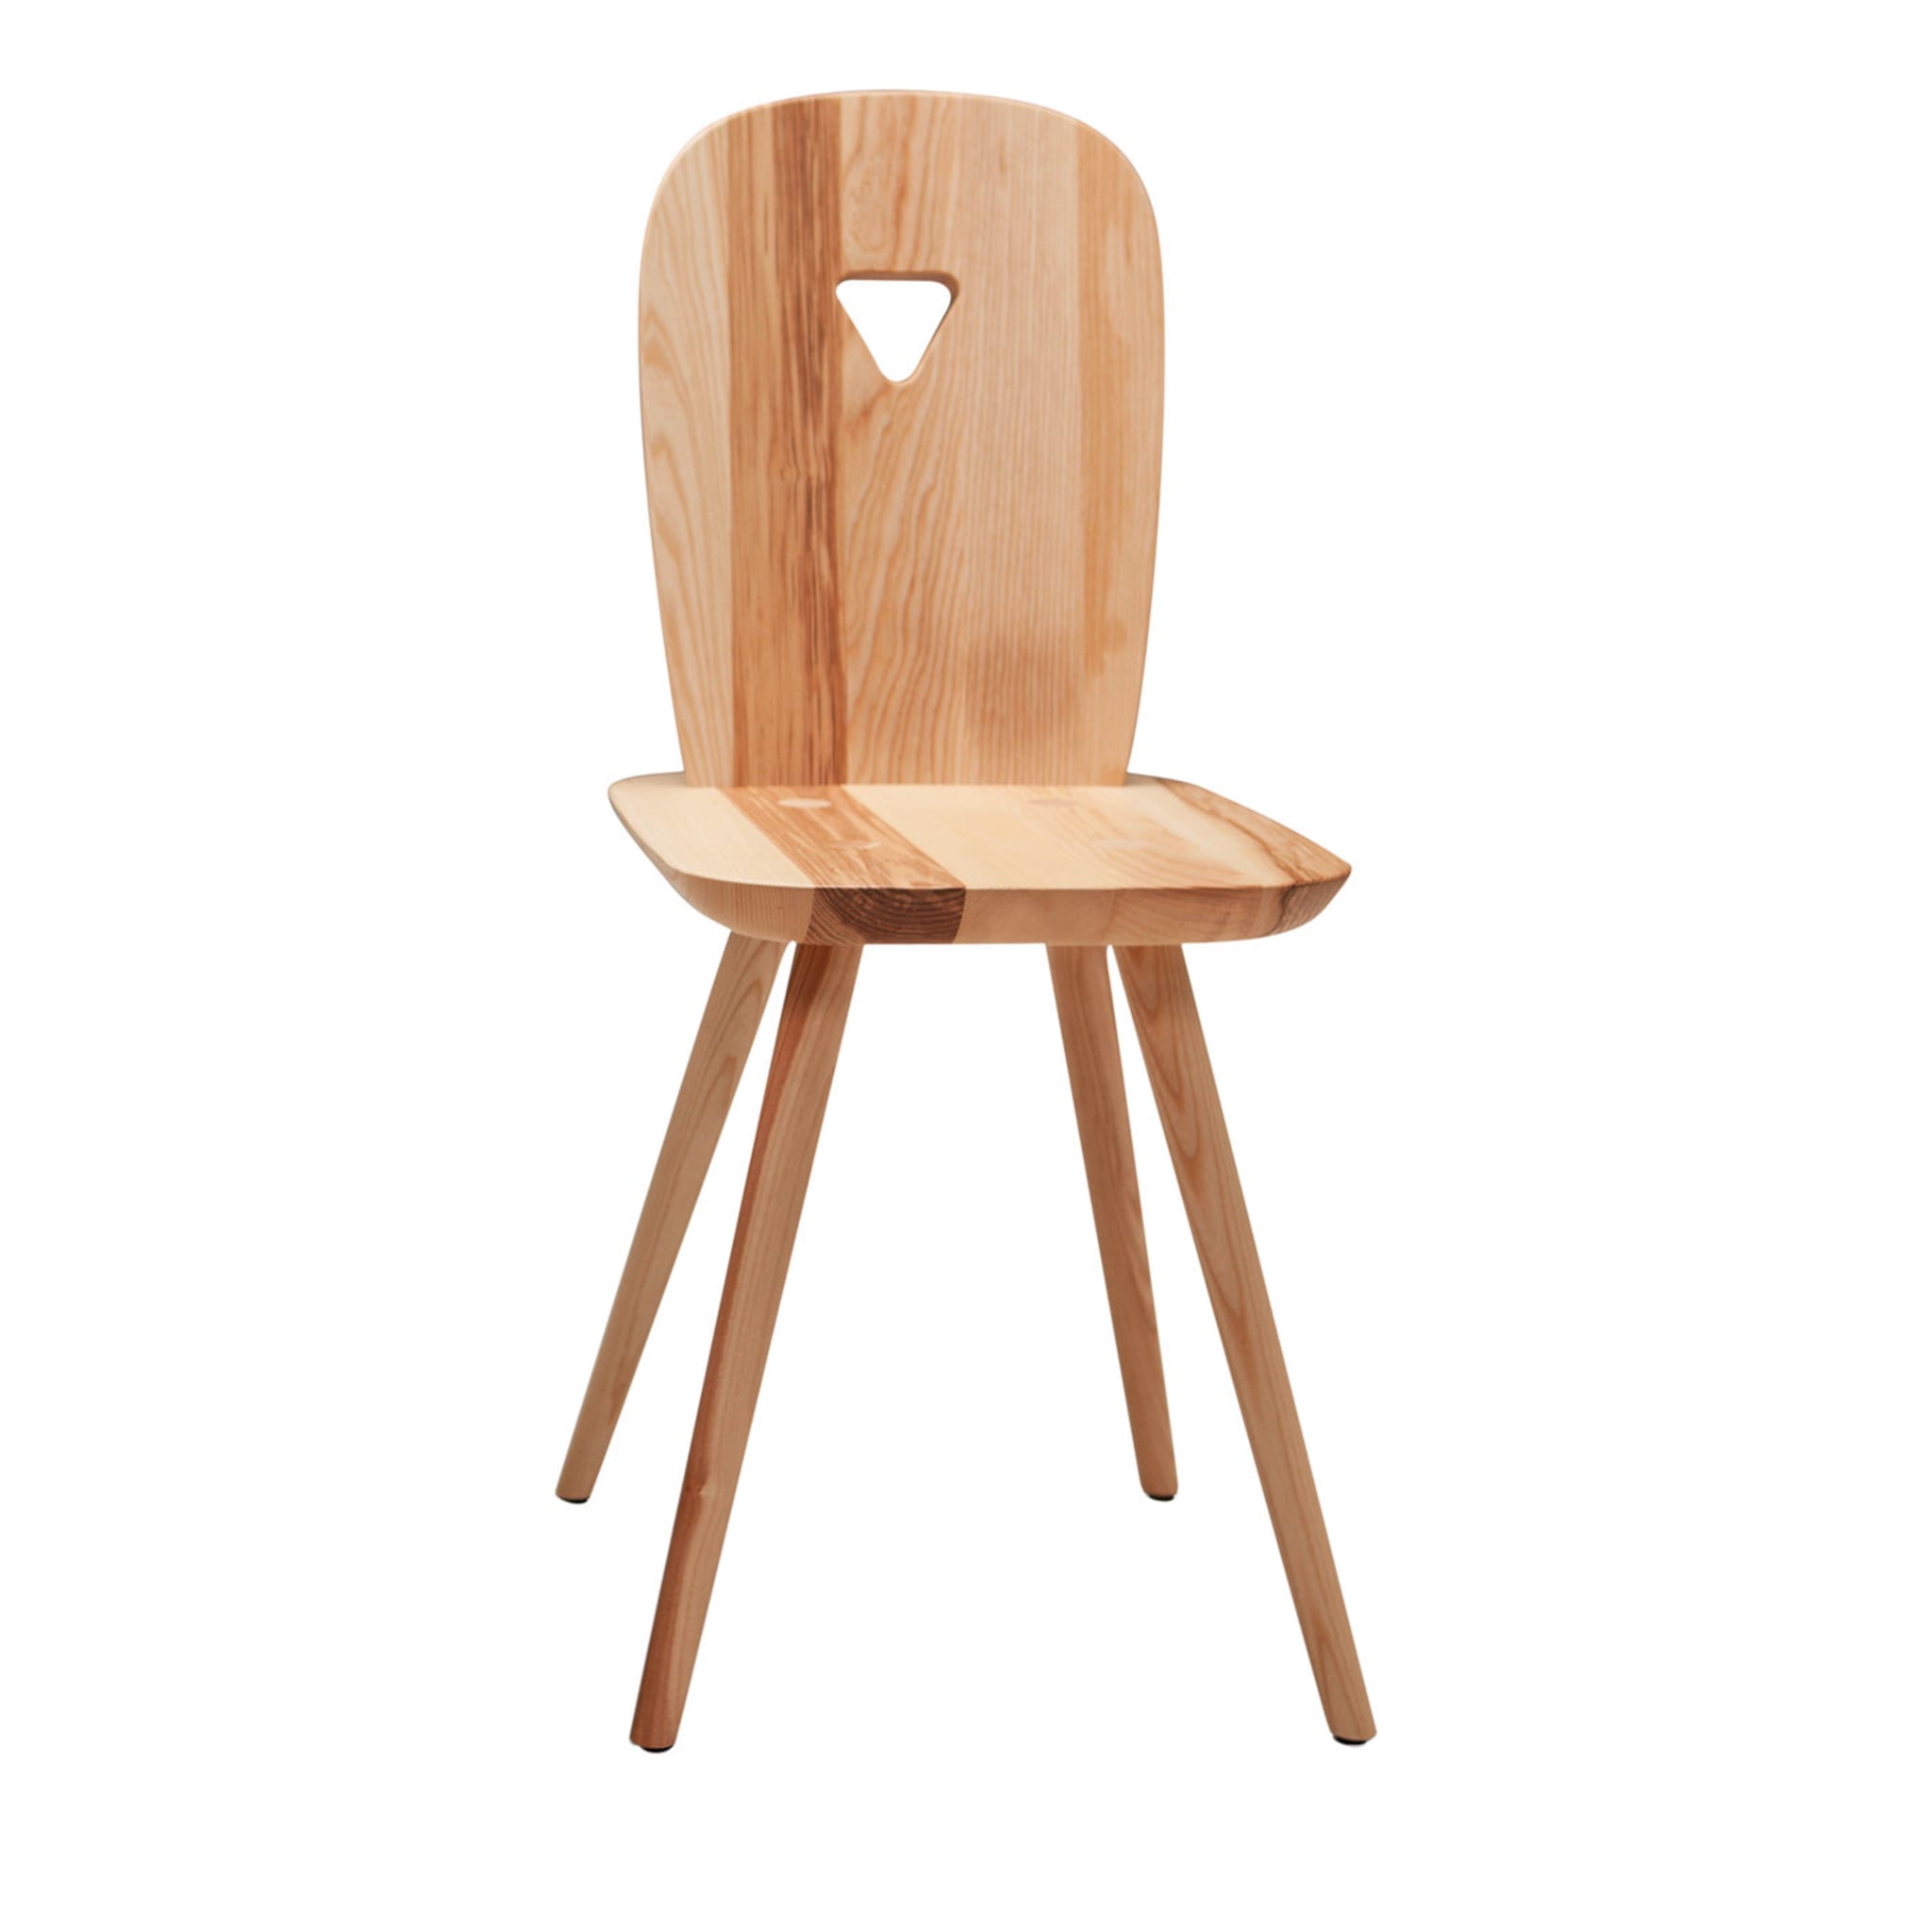 La-Dina Set of 2 Ash Wood Chairs by Luca Nichetto - Main view